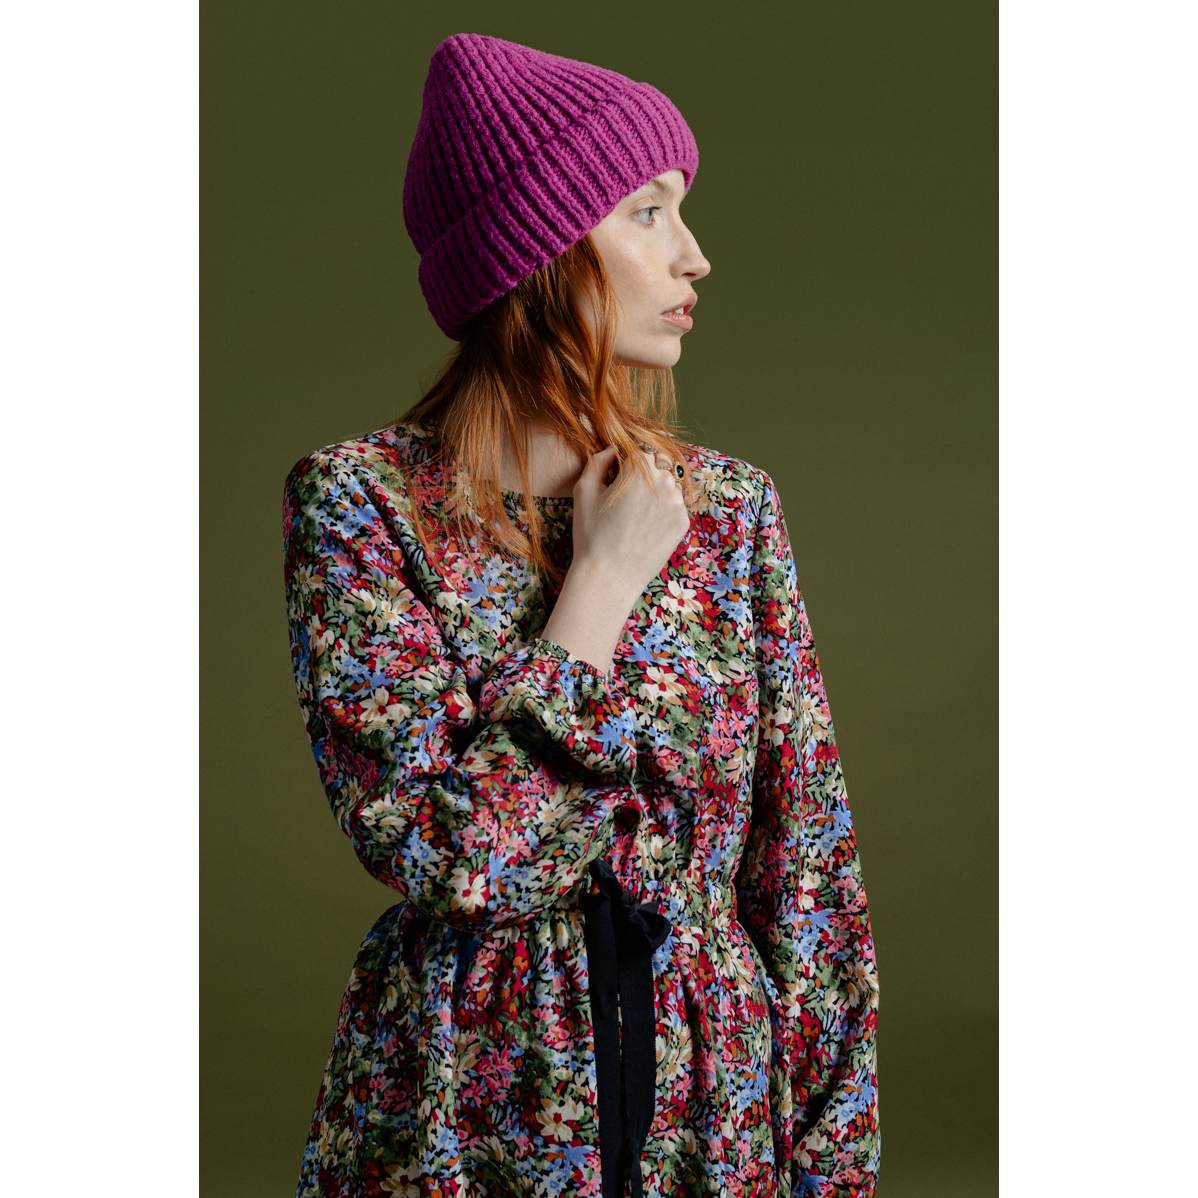 Molly Bracken - Ladies Knitted Hat - Bougainvillier Purple (1)